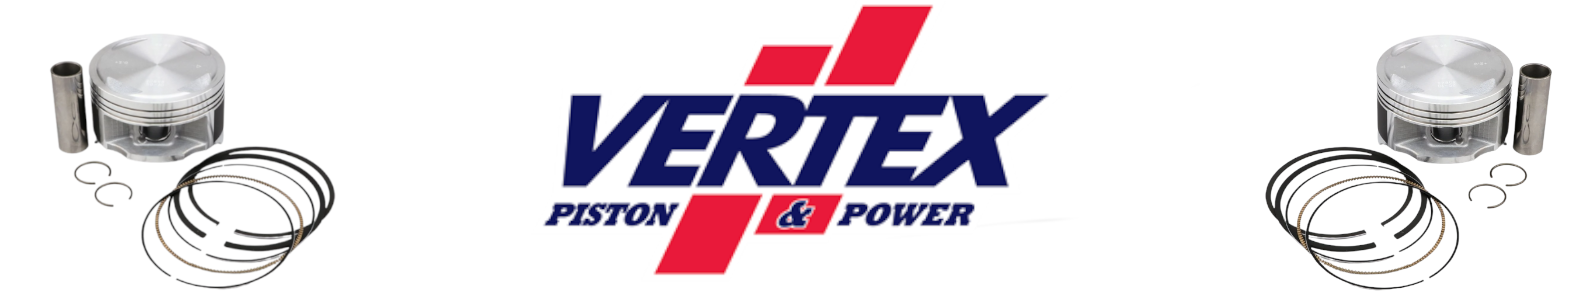 bandeira Vertex Pistons